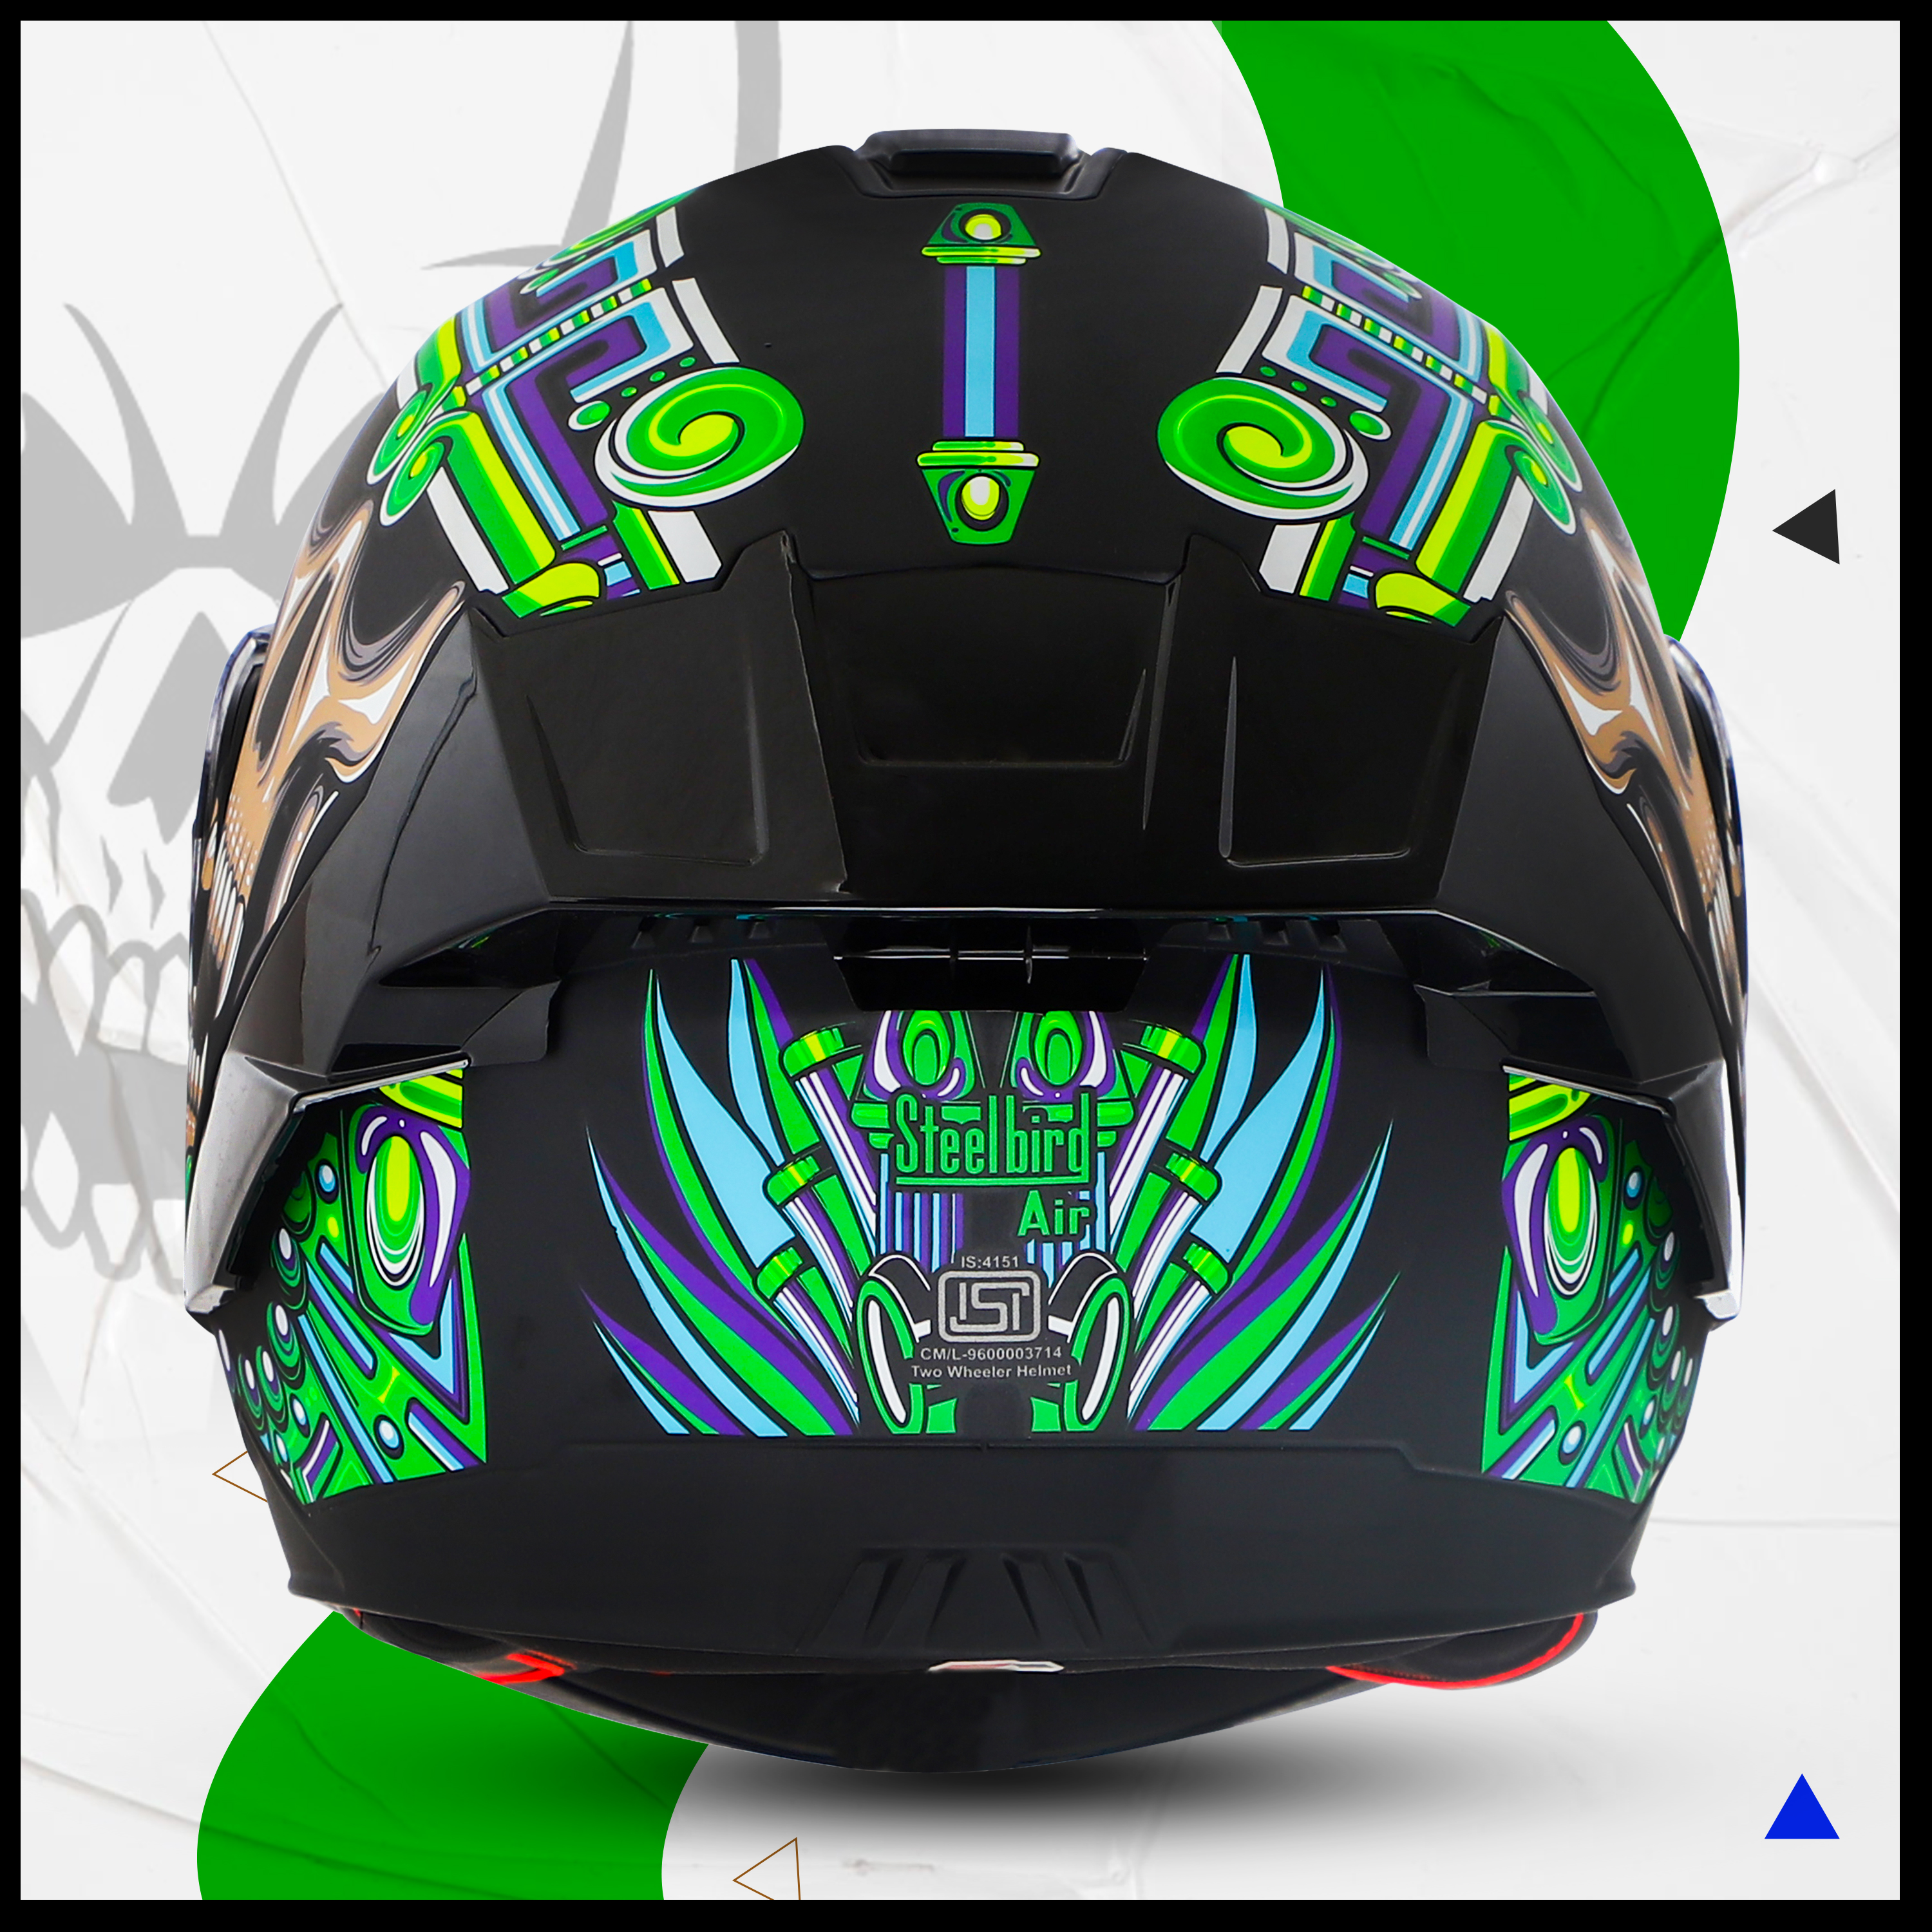 Steelbird SBA-8 Hunt ISI Certified Flip-Up Graphic Helmet For Men And Women With Inner Smoke Sun Shield (Glossy Black Green With Black Spoiler And Smoke Visor)